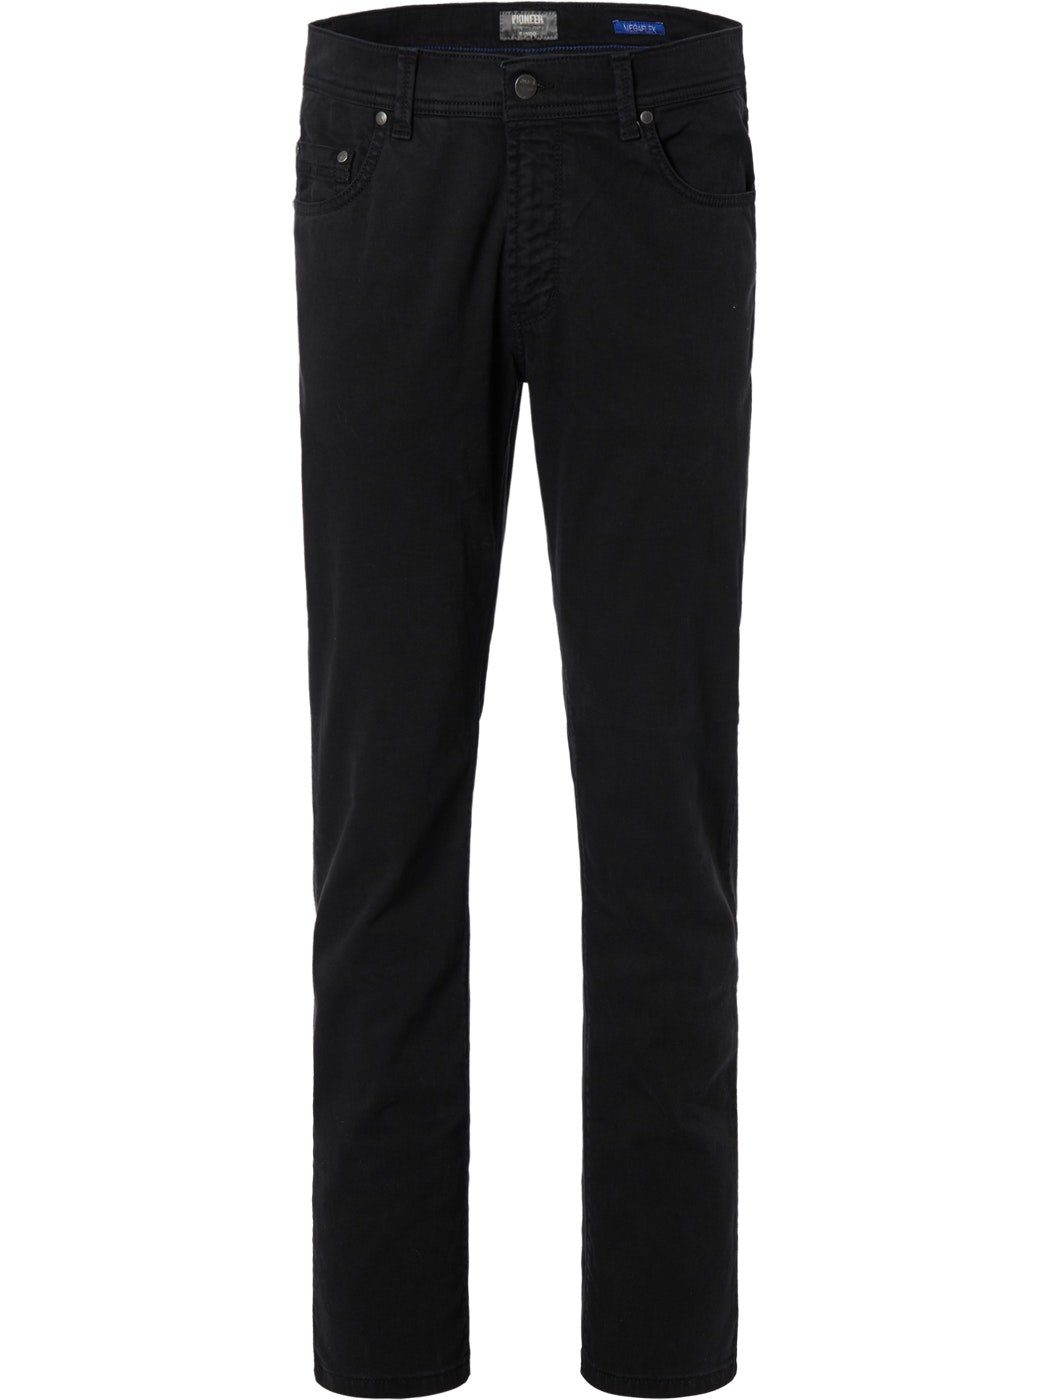 RANDO MEGAFLEX Jeans 1680 black PIONEER 3894.11 Pioneer Authentic 5-Pocket-Jeans